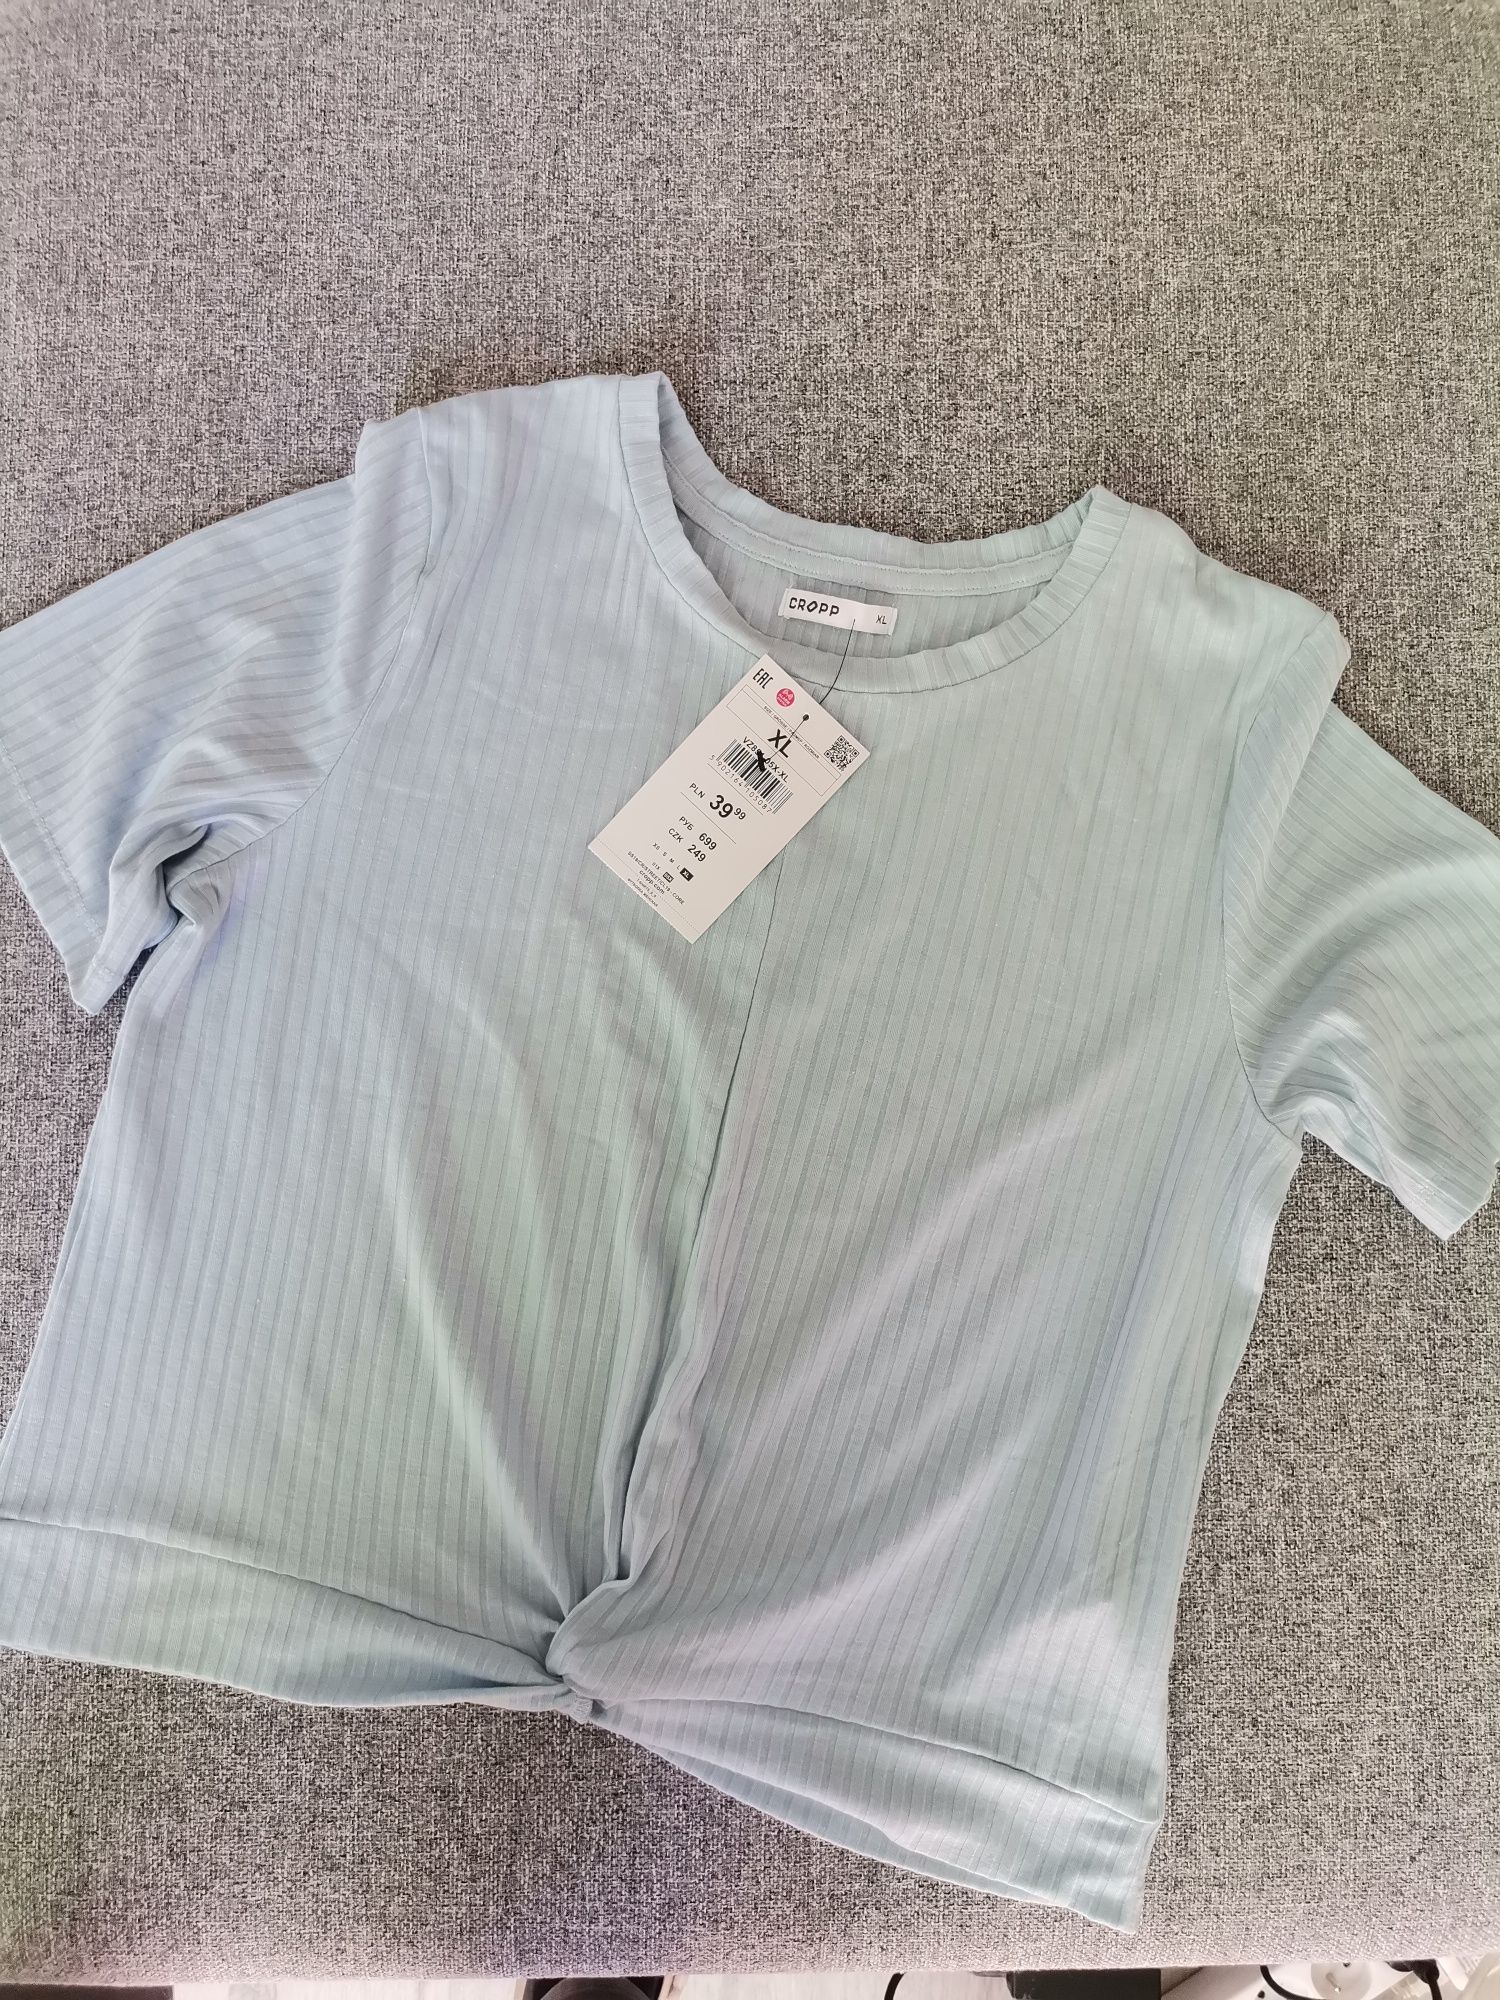 Błękitny tshirt bluzka crop top Cropp XL nowy